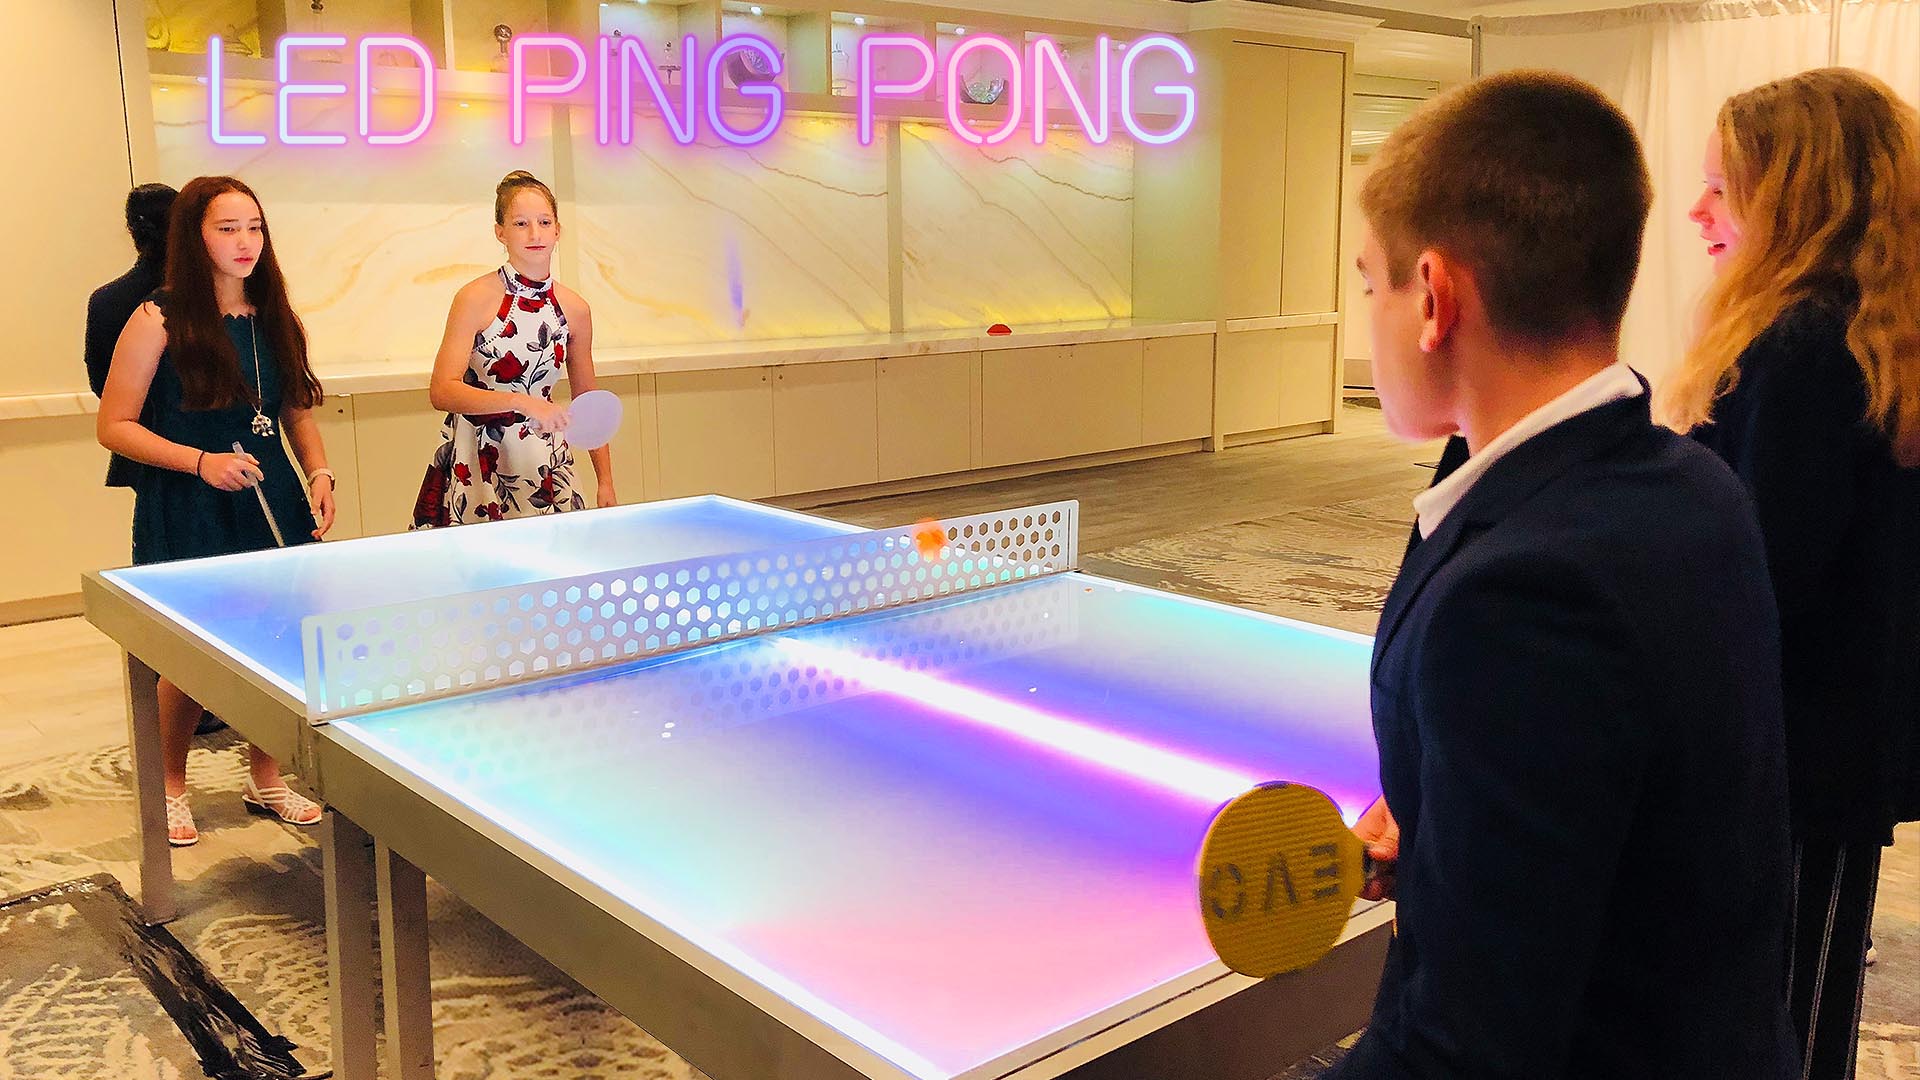 Ping Pong Tables Miami, Table Tennis Miami